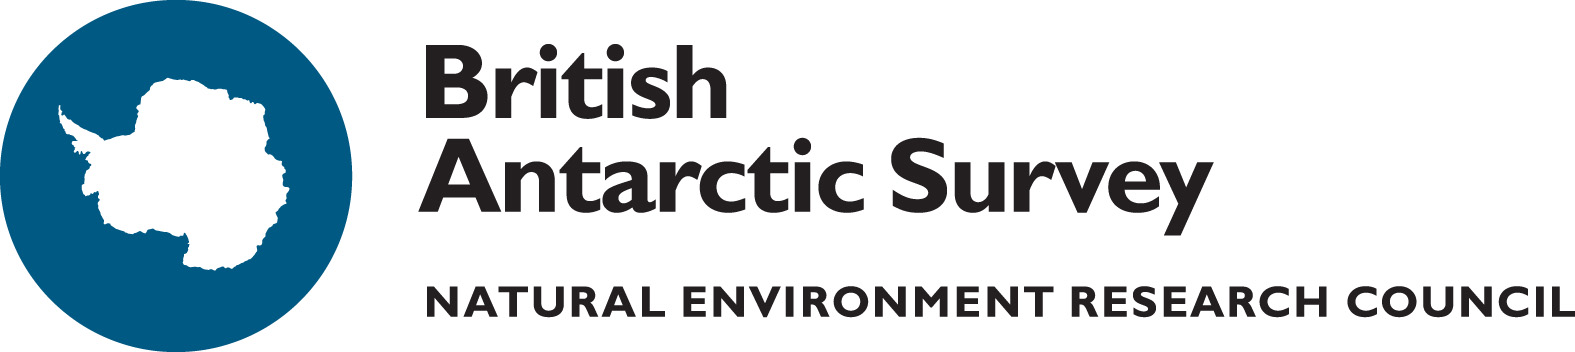 british-antarctic-survey-logo